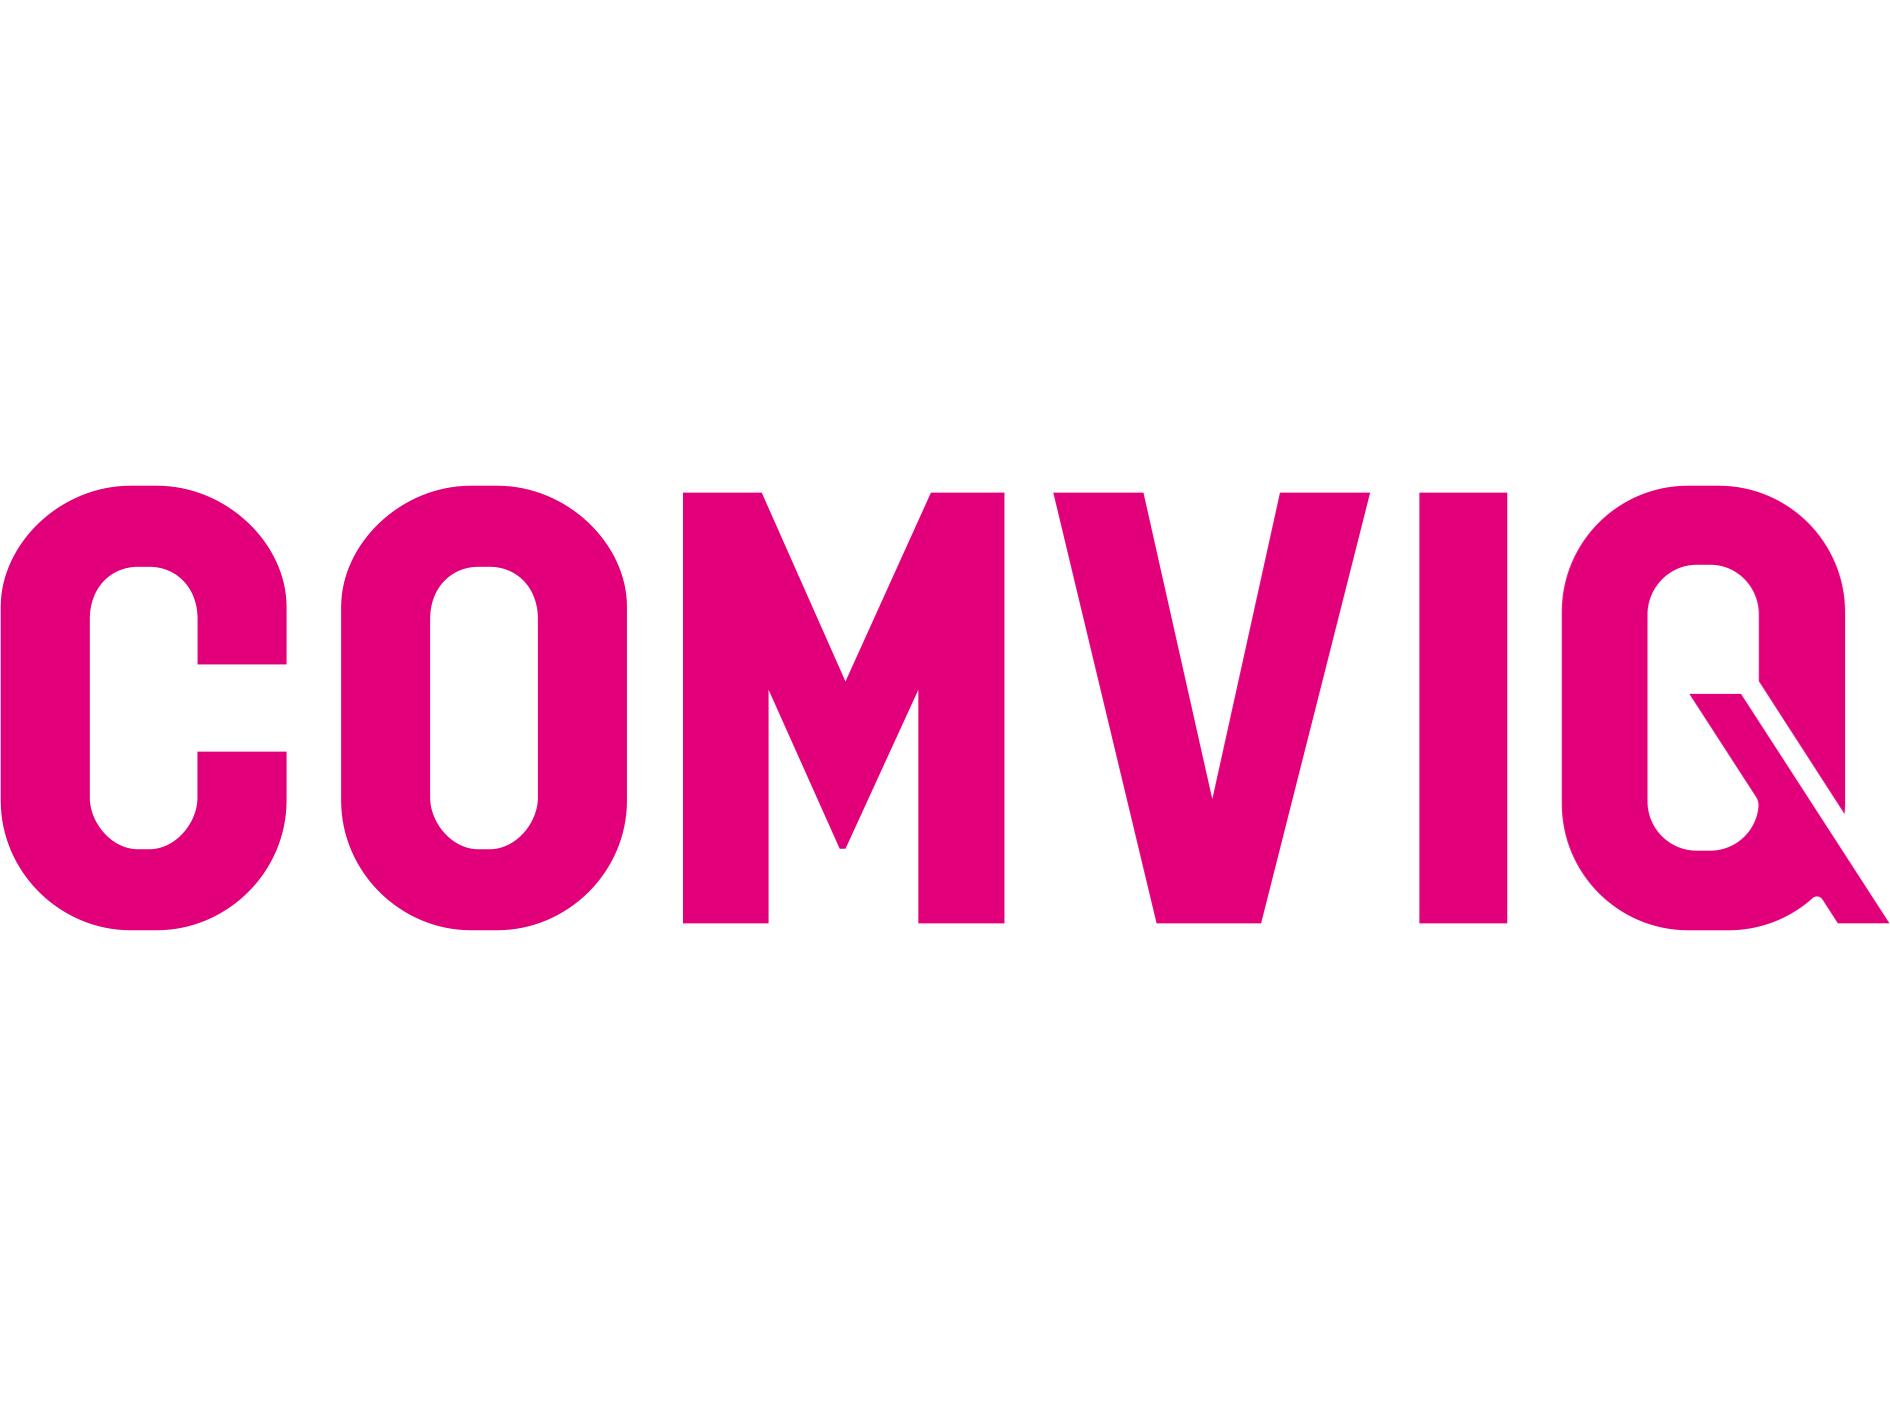 Logo of Comviq abonnemang